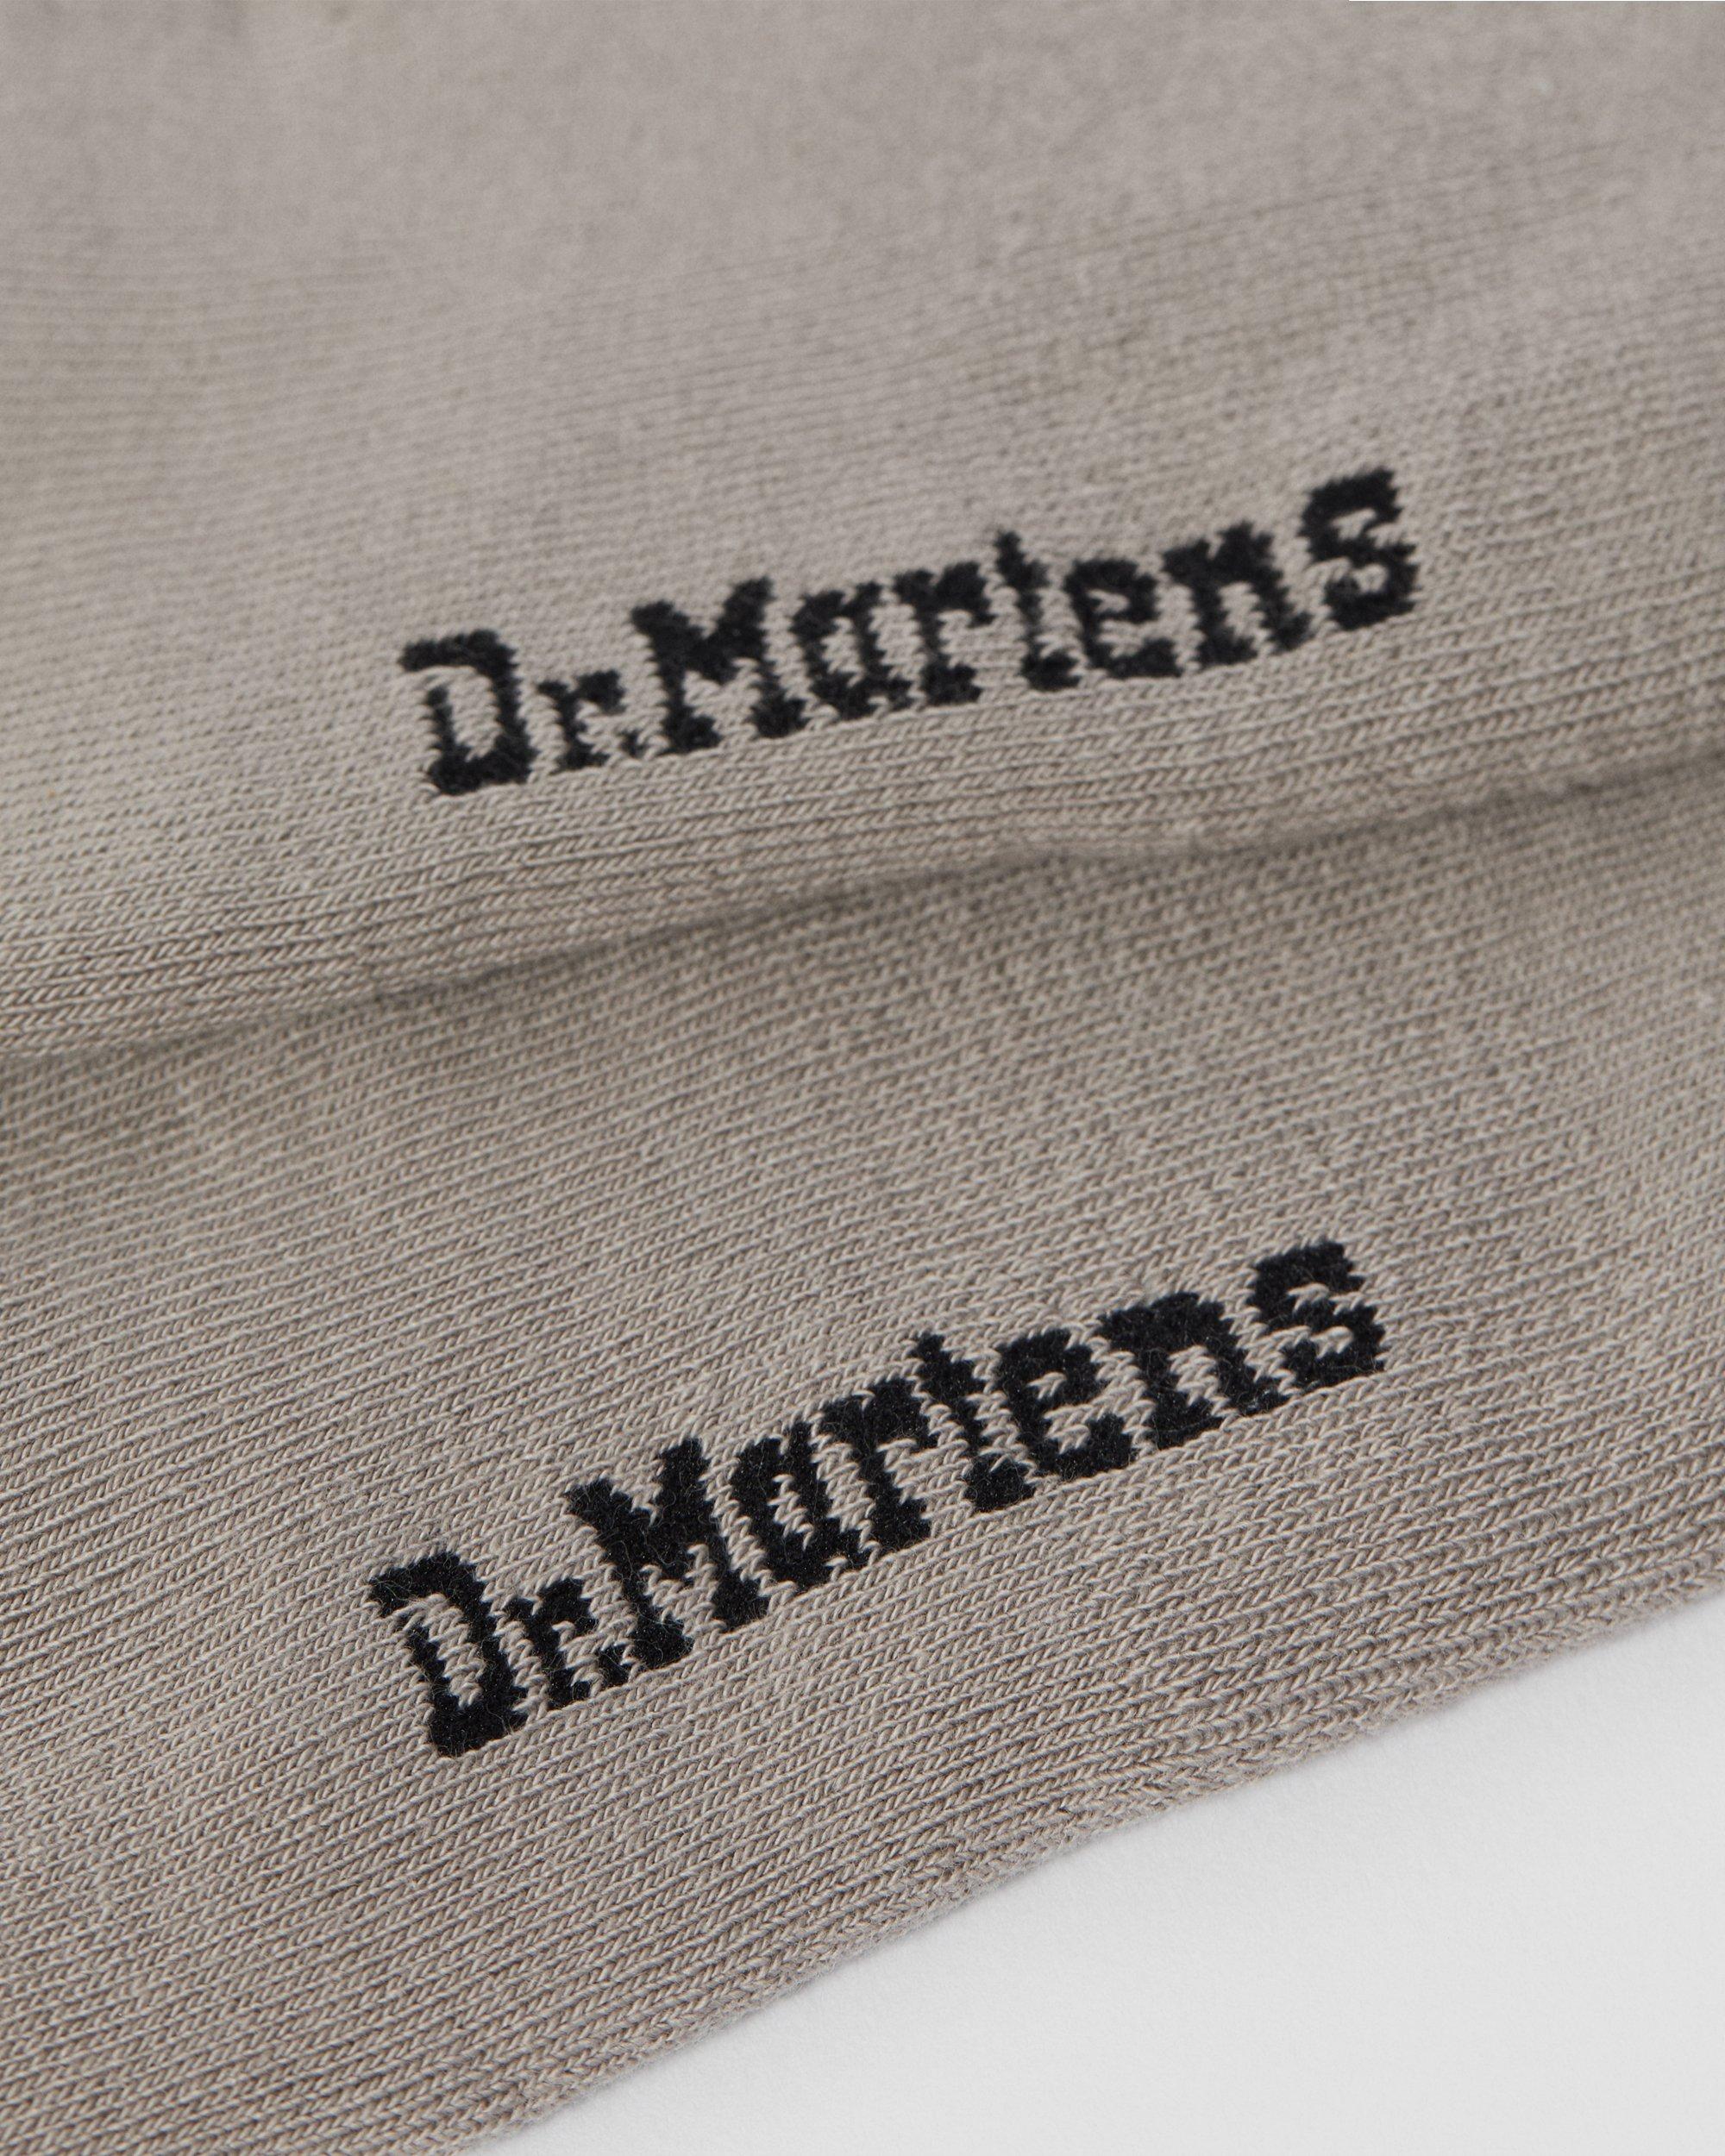 dr martens double doc socks